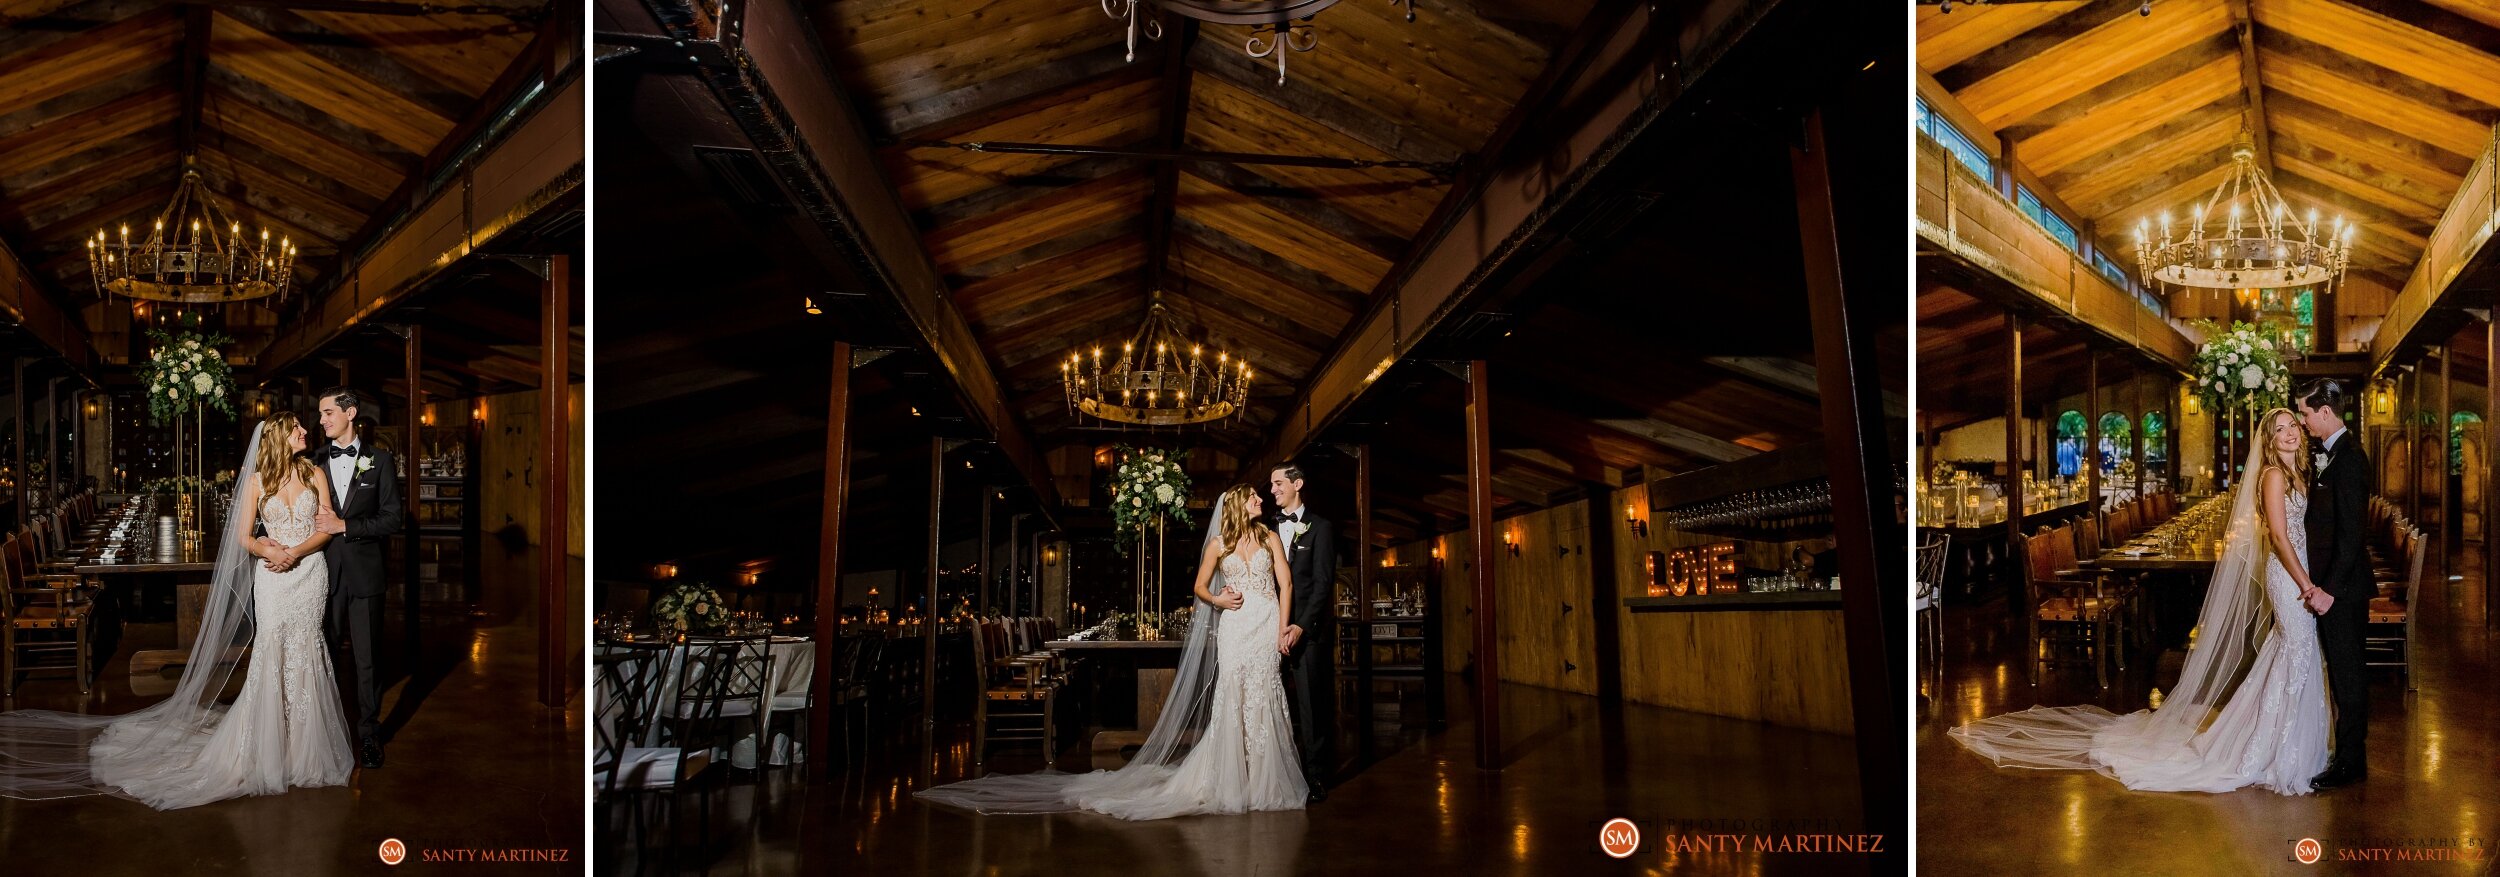 Wedding - The Cooper Estate - Photography by Santy Martinez 28.jpg